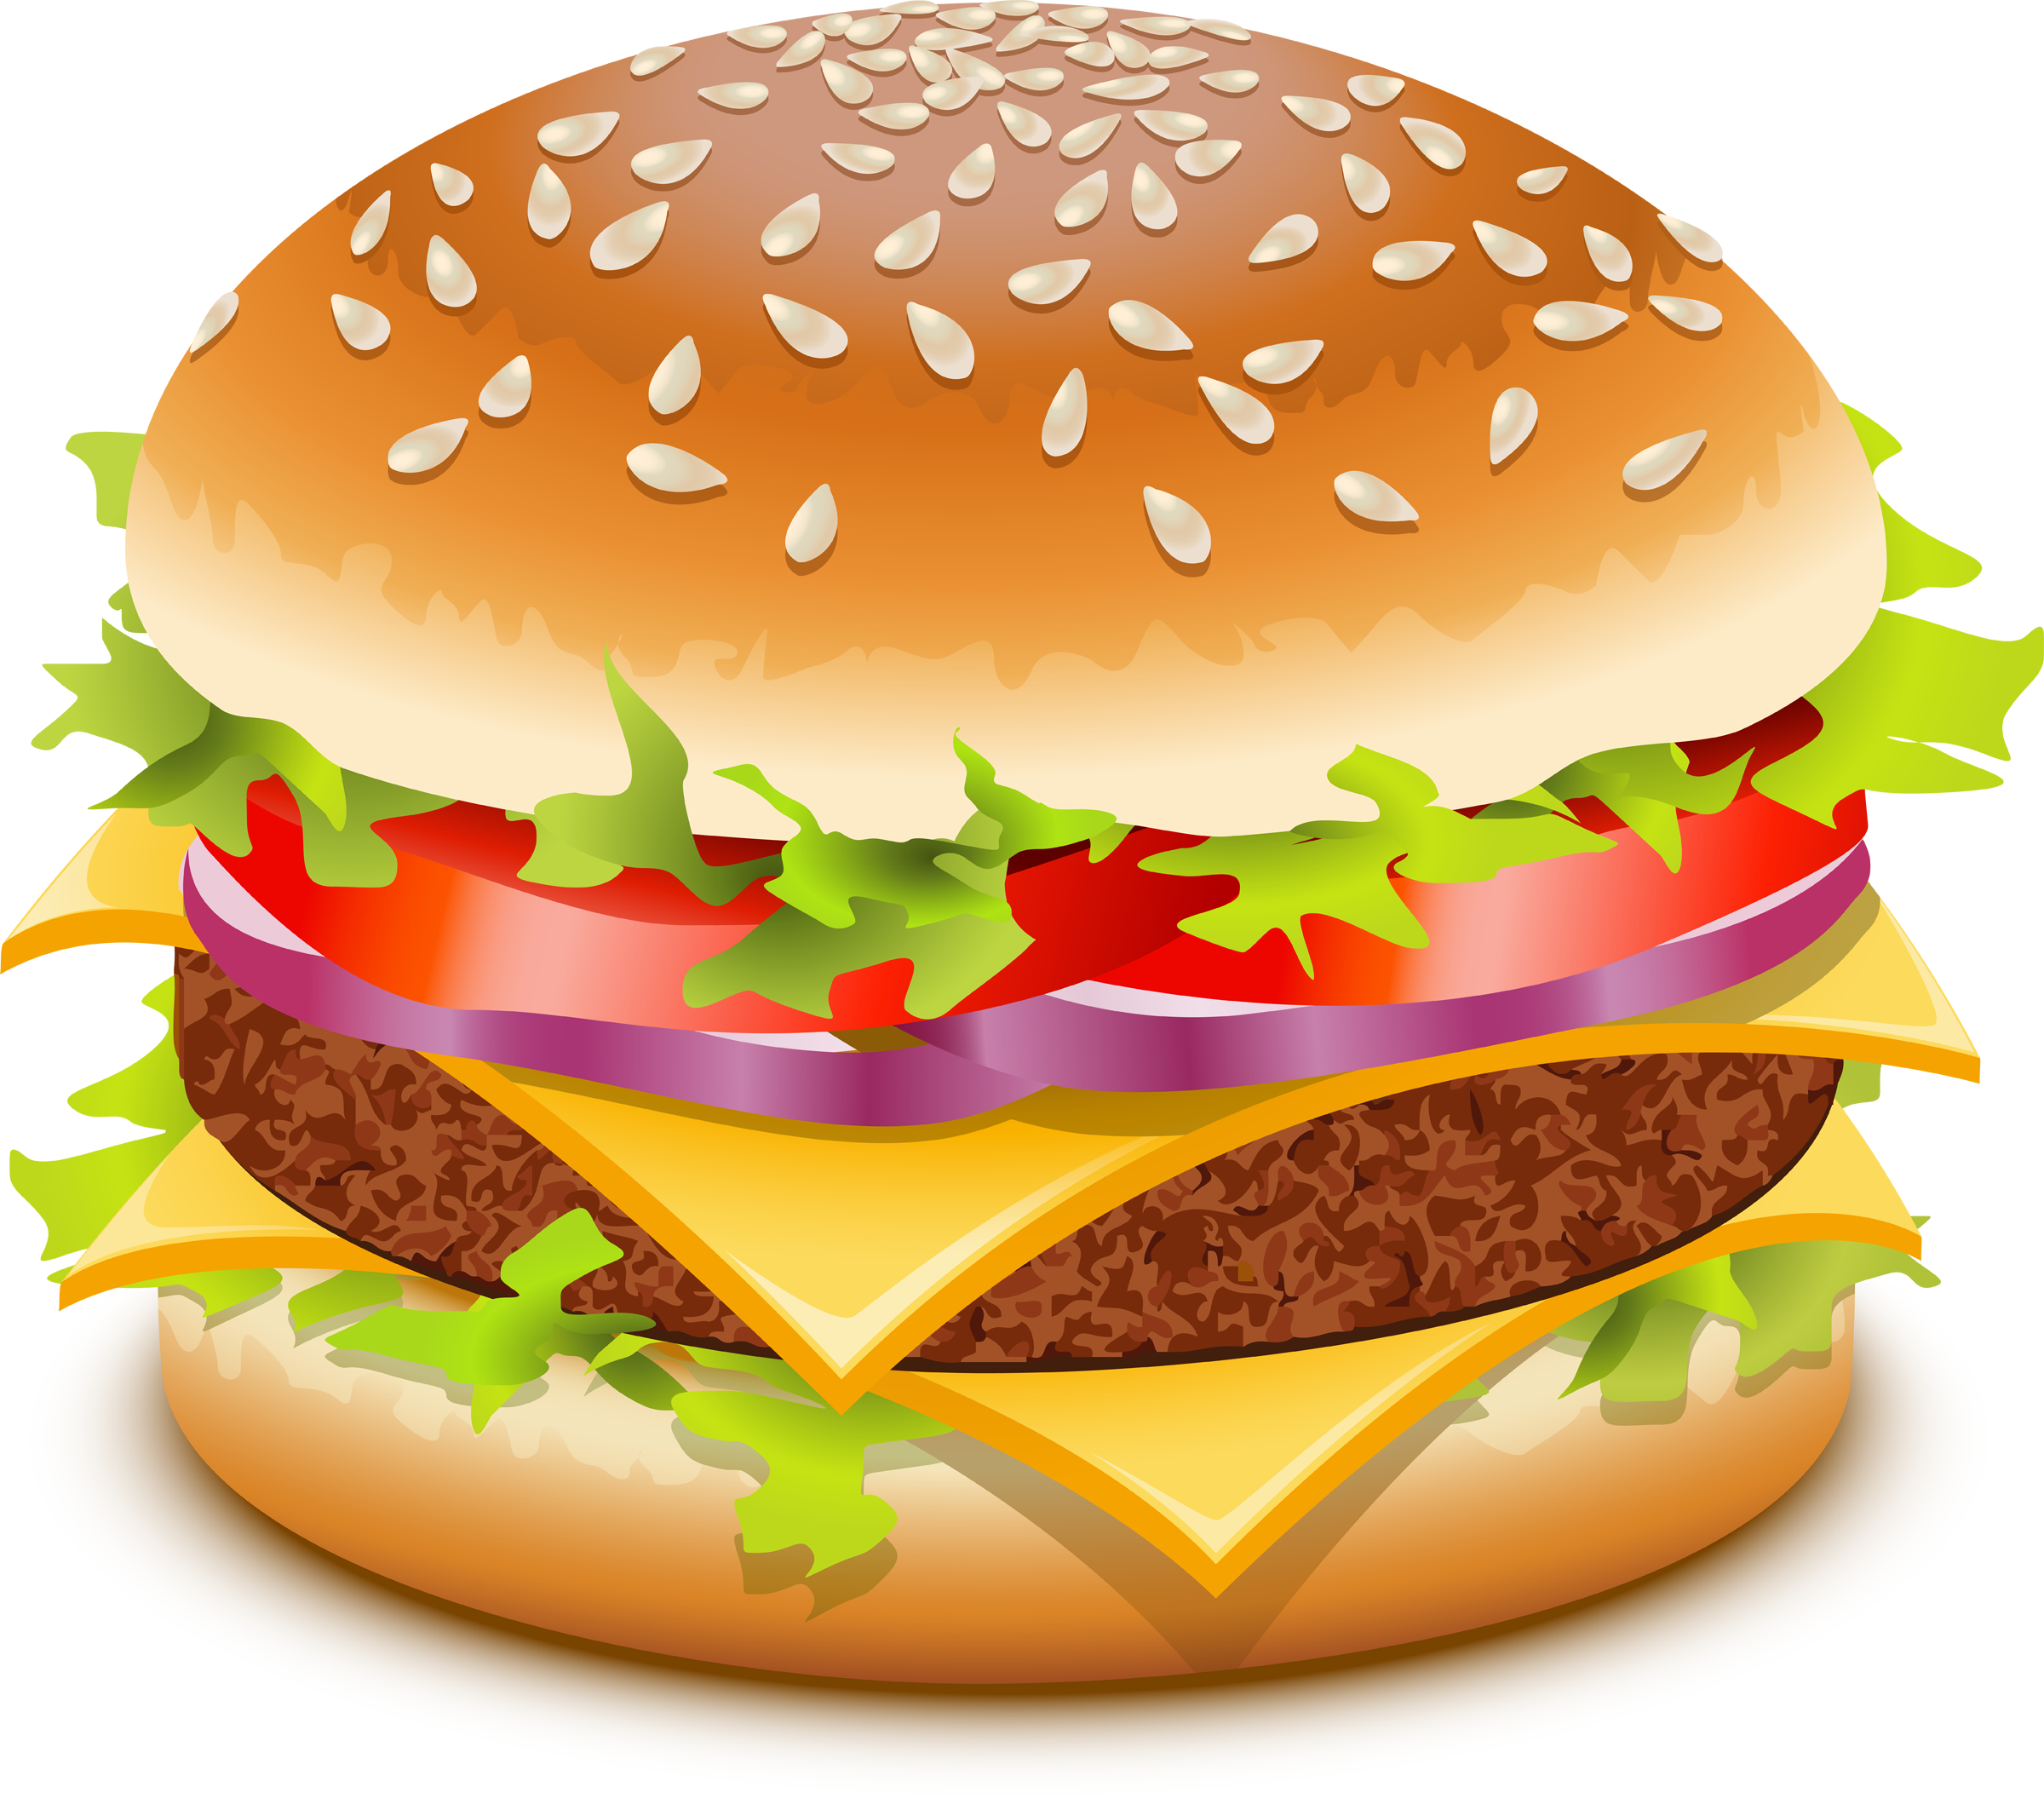 Hamburger cartoon clip art 3 